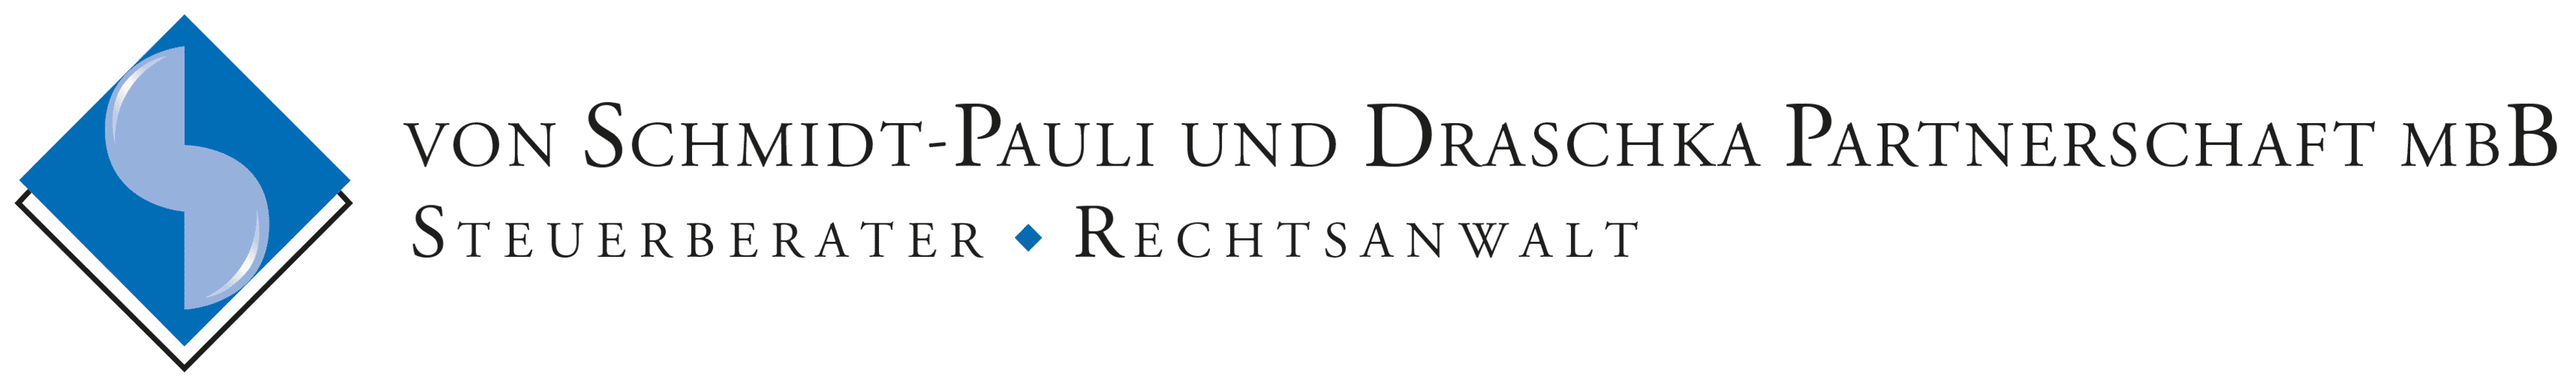 Logo: von Schmidt-Pauli und Draschka Partnerschaft mbB Steuerberater Rechtsanwalt